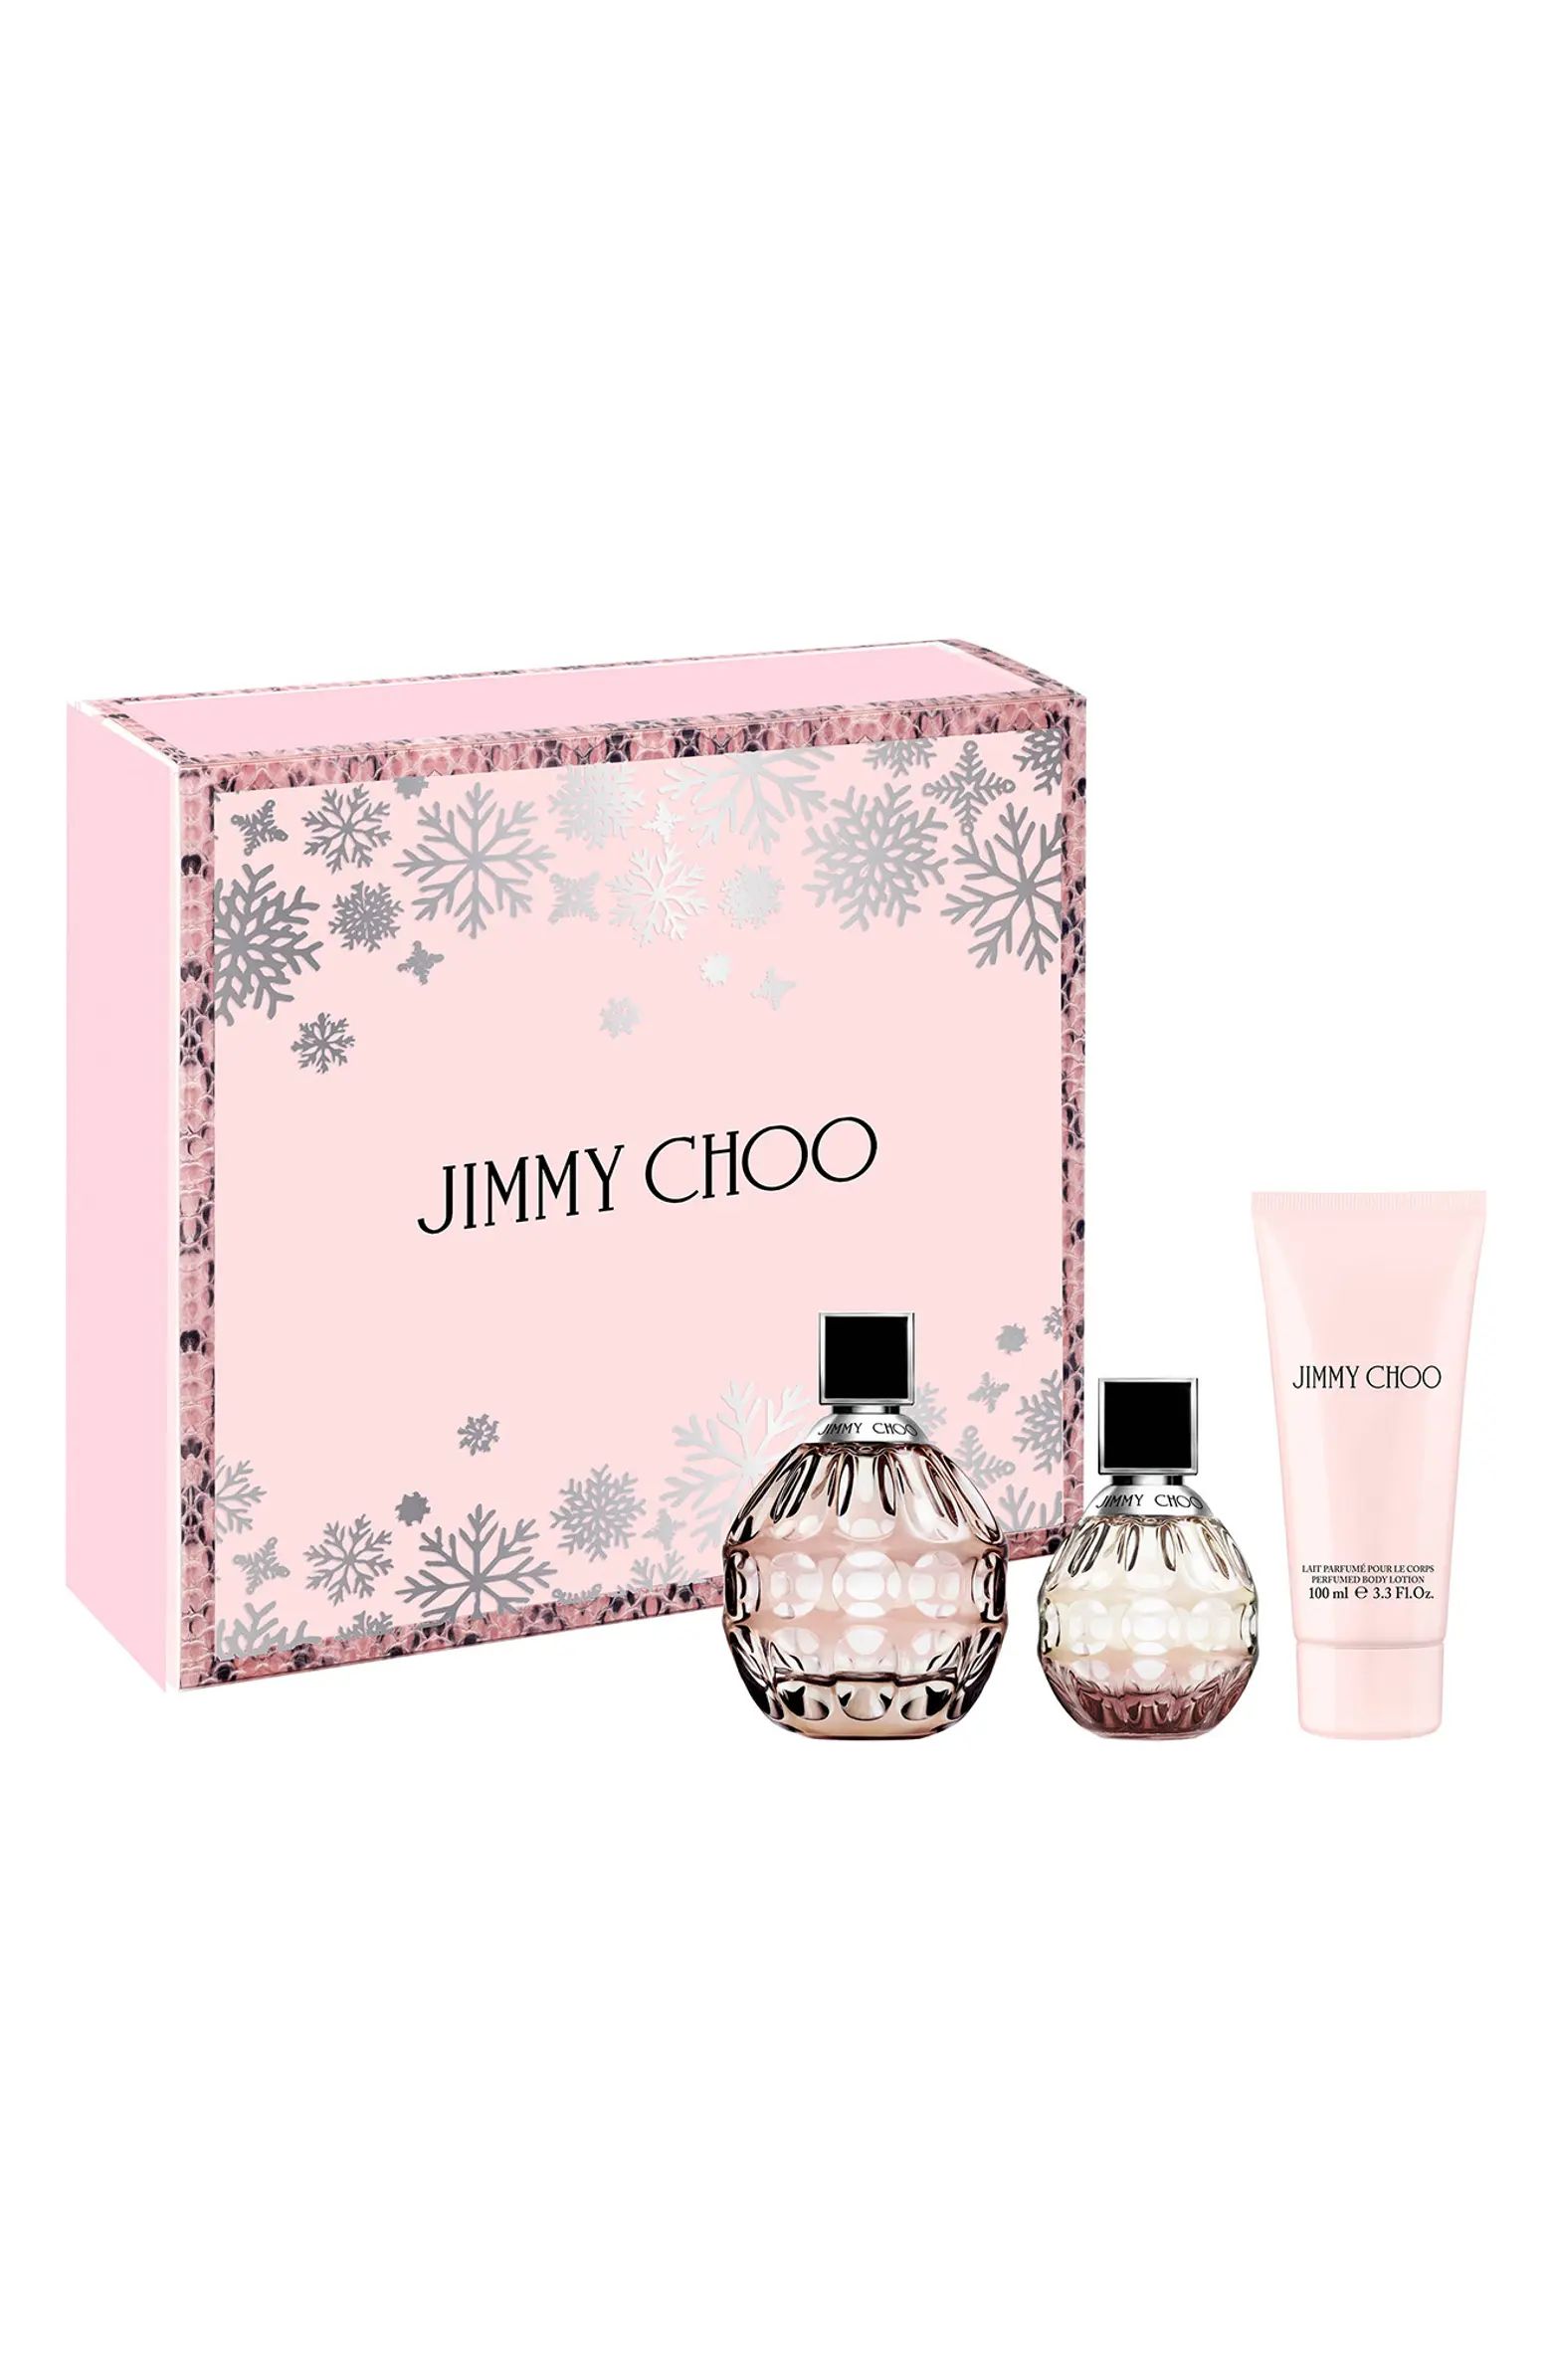 Jimmy Choo Eau de Parfum Set USD $215 Value | Nordstrom | Nordstrom